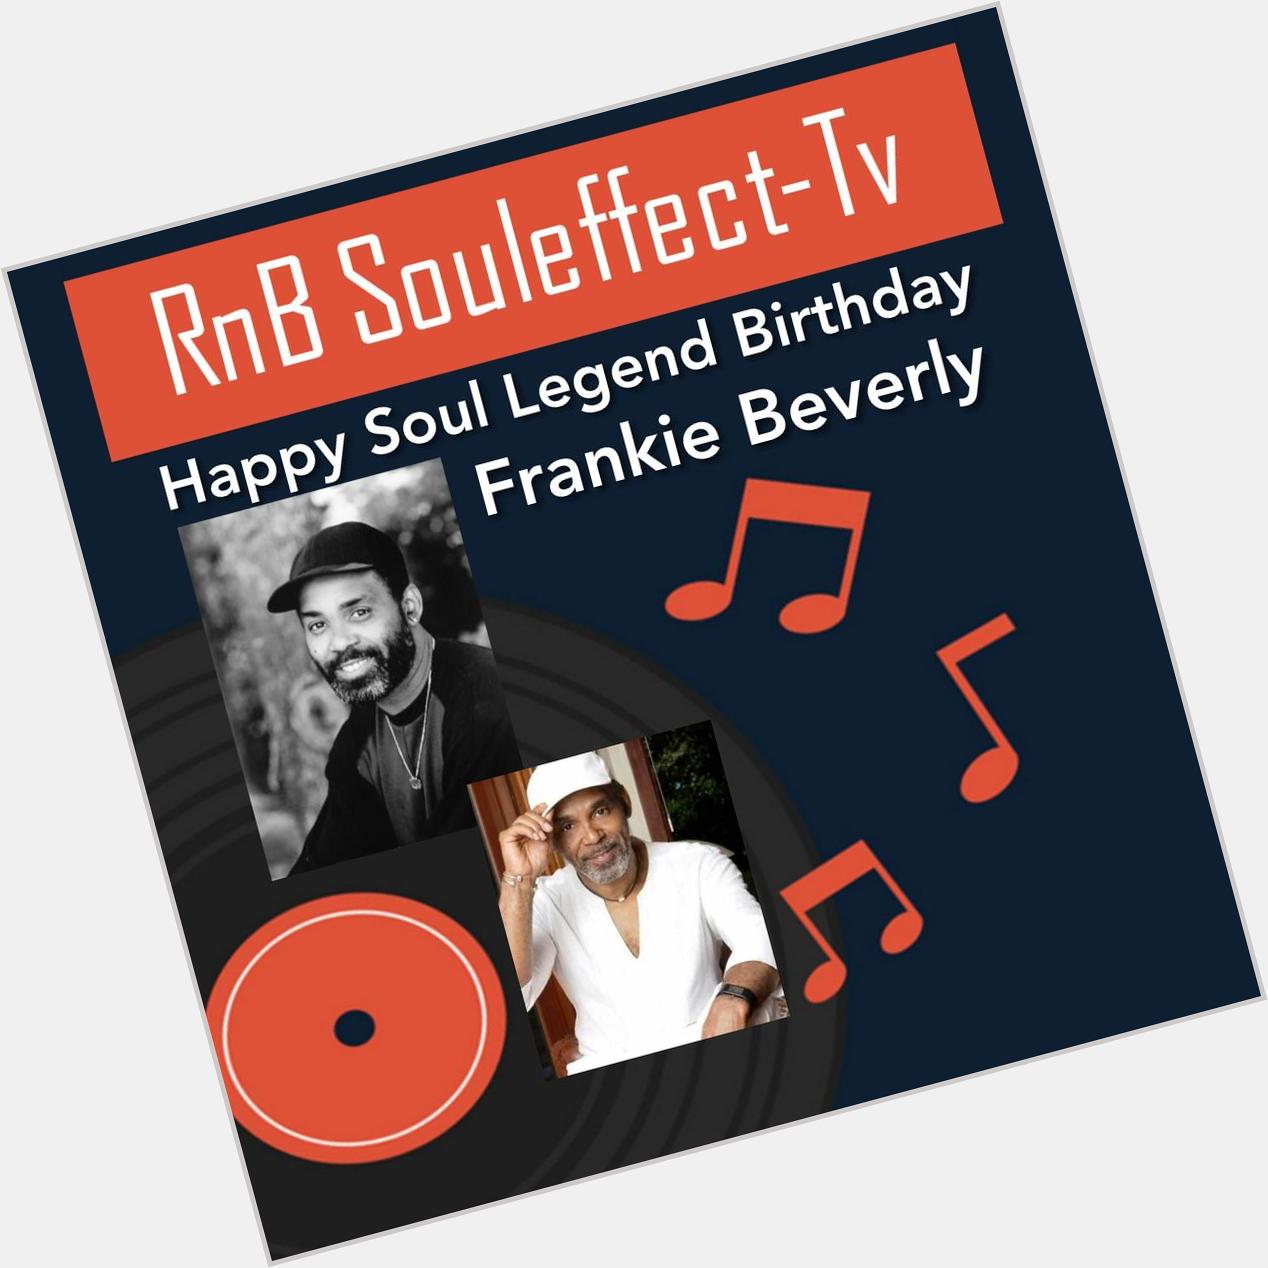 Happy Soul Legend Birthday Frankie Beverly      